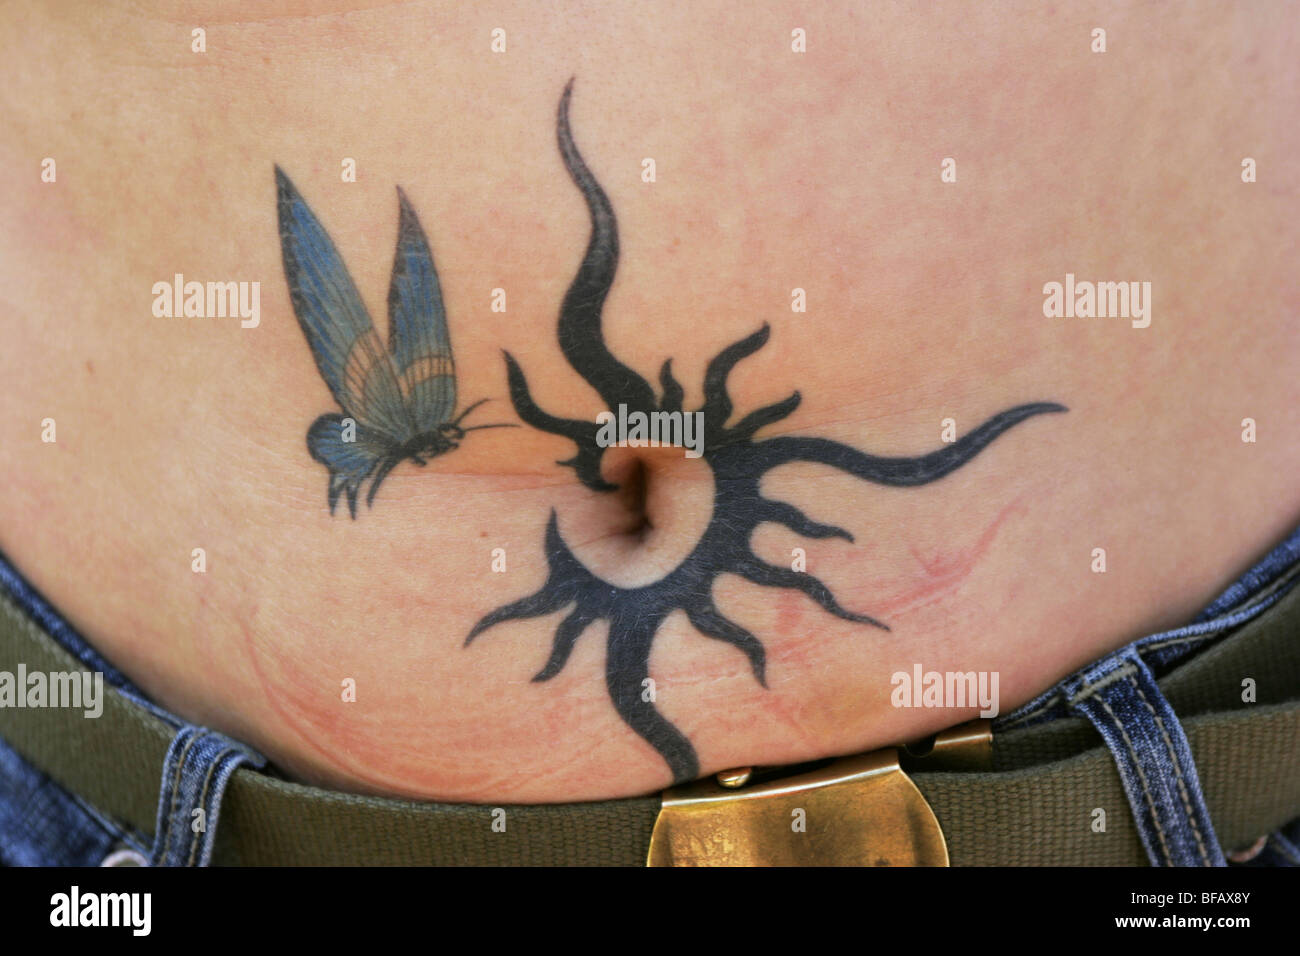 35 Interesting Pregnancy Tattoos Designs  Ideas Pictures  PICSMINE